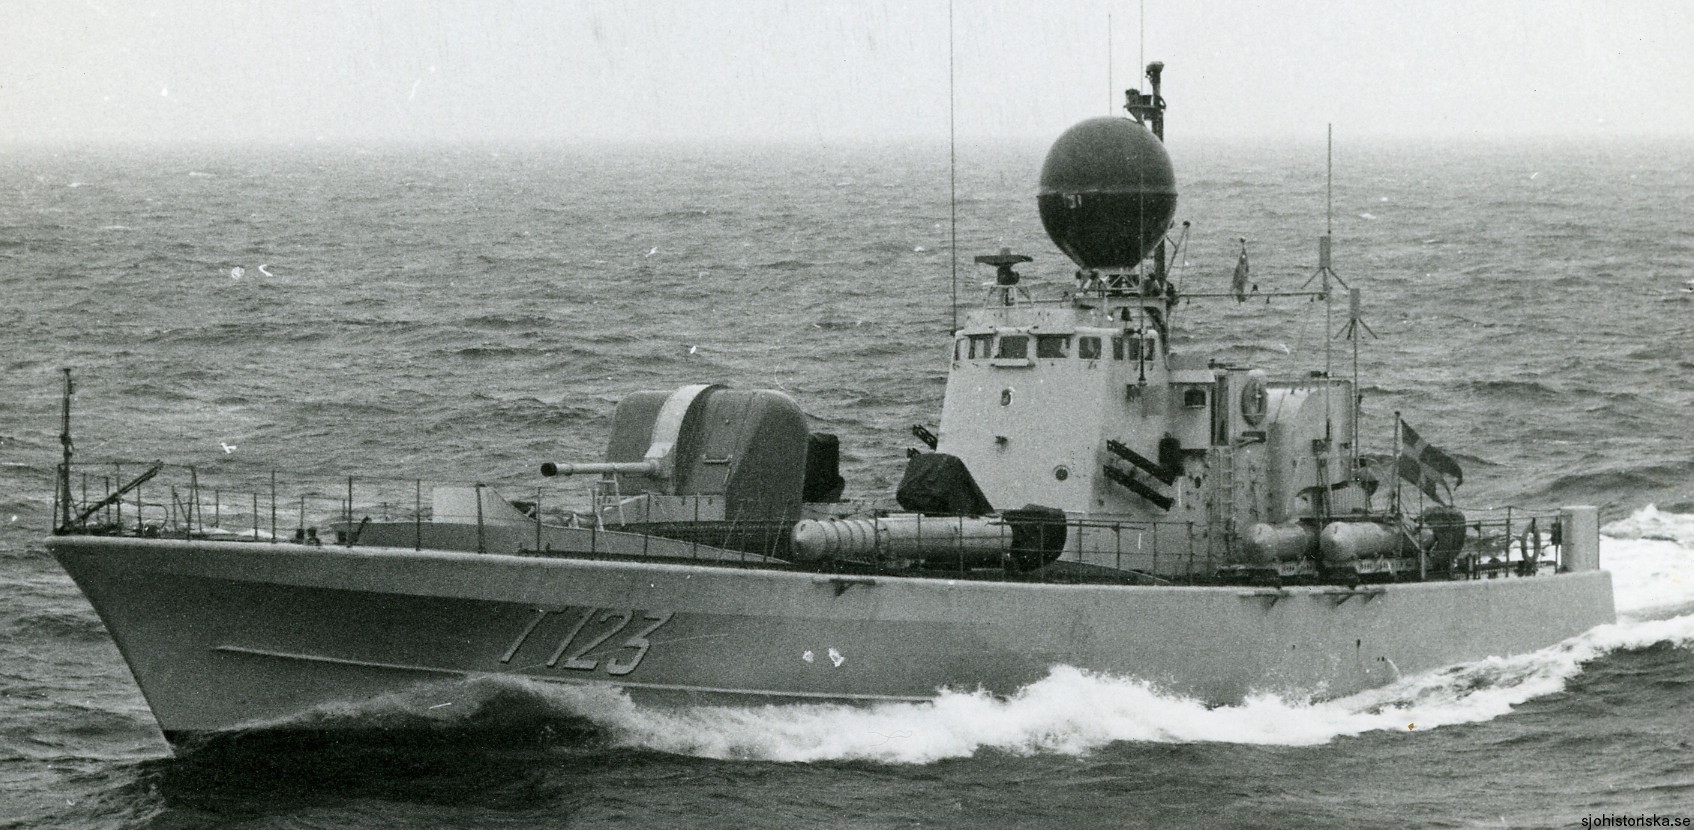 t123 capella hswms hms spica class fast attack craft torpedo boat vessel swedish navy svenska marinen 03